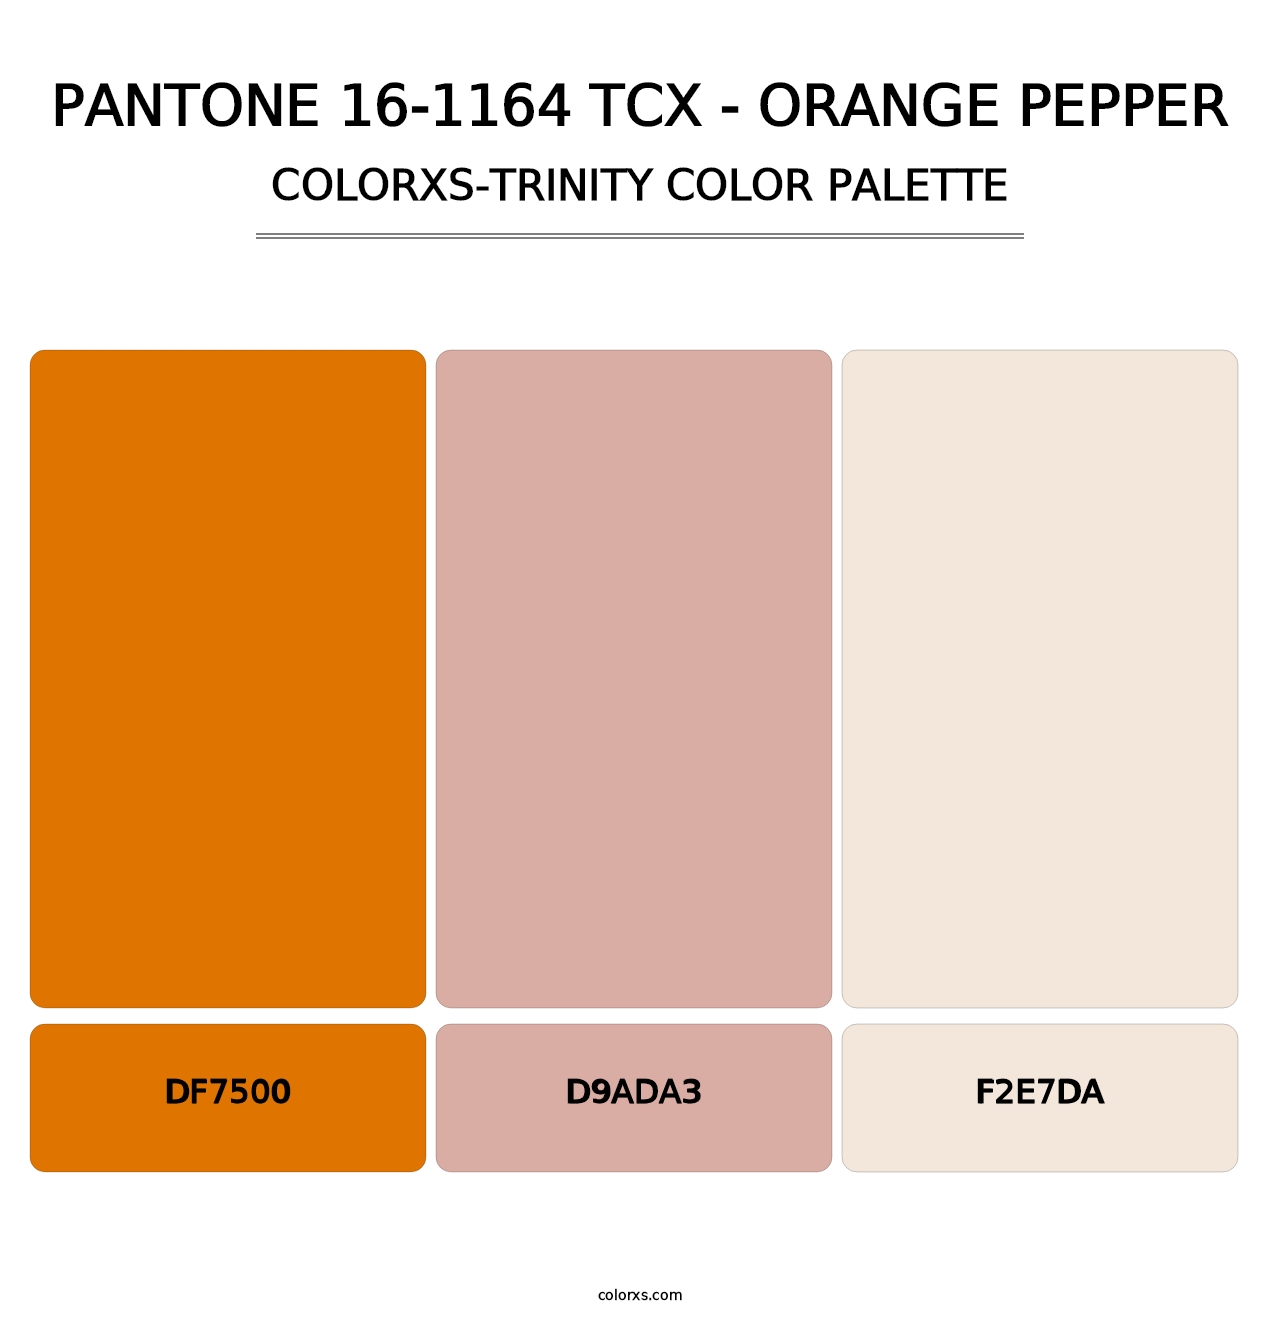 PANTONE 16-1164 TCX - Orange Pepper - Colorxs Trinity Palette